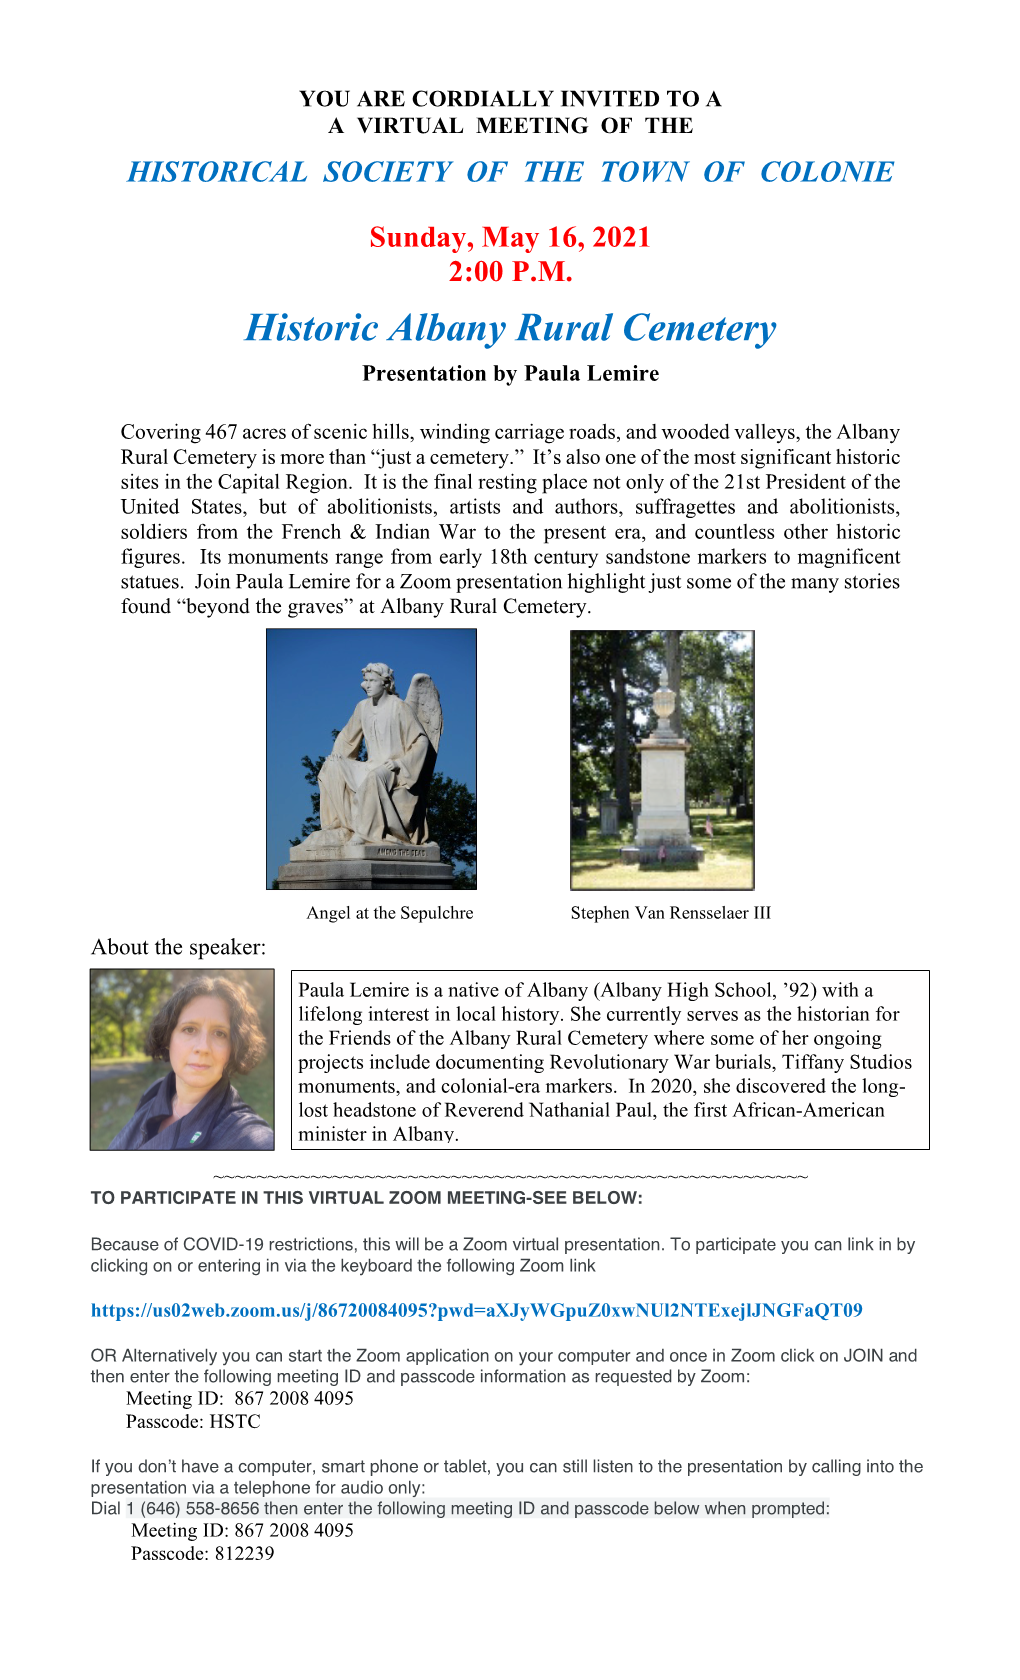 Historic Albany Rural Cemetery Presentation by Paula Lemire